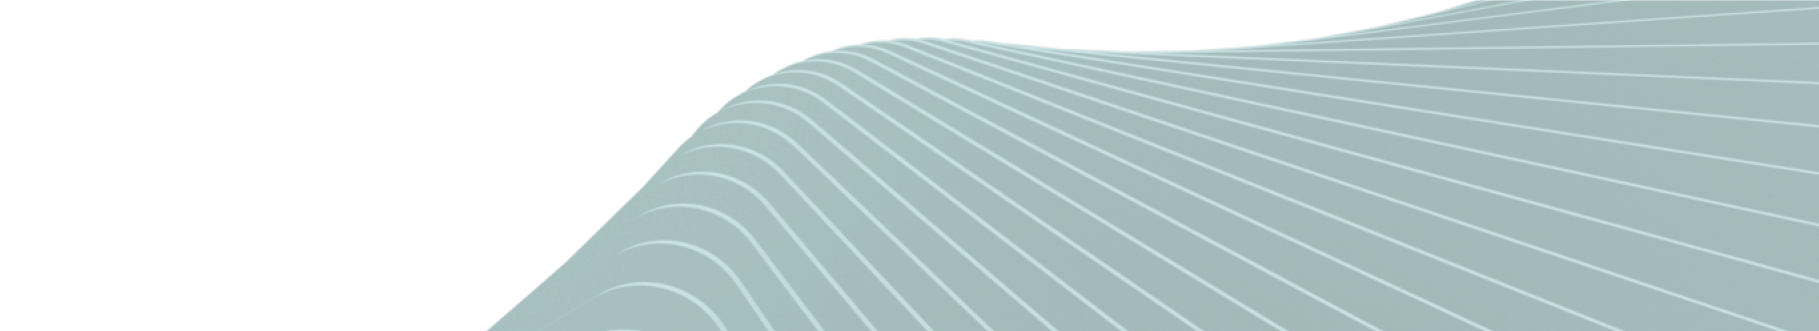 striped curve right feature desktop